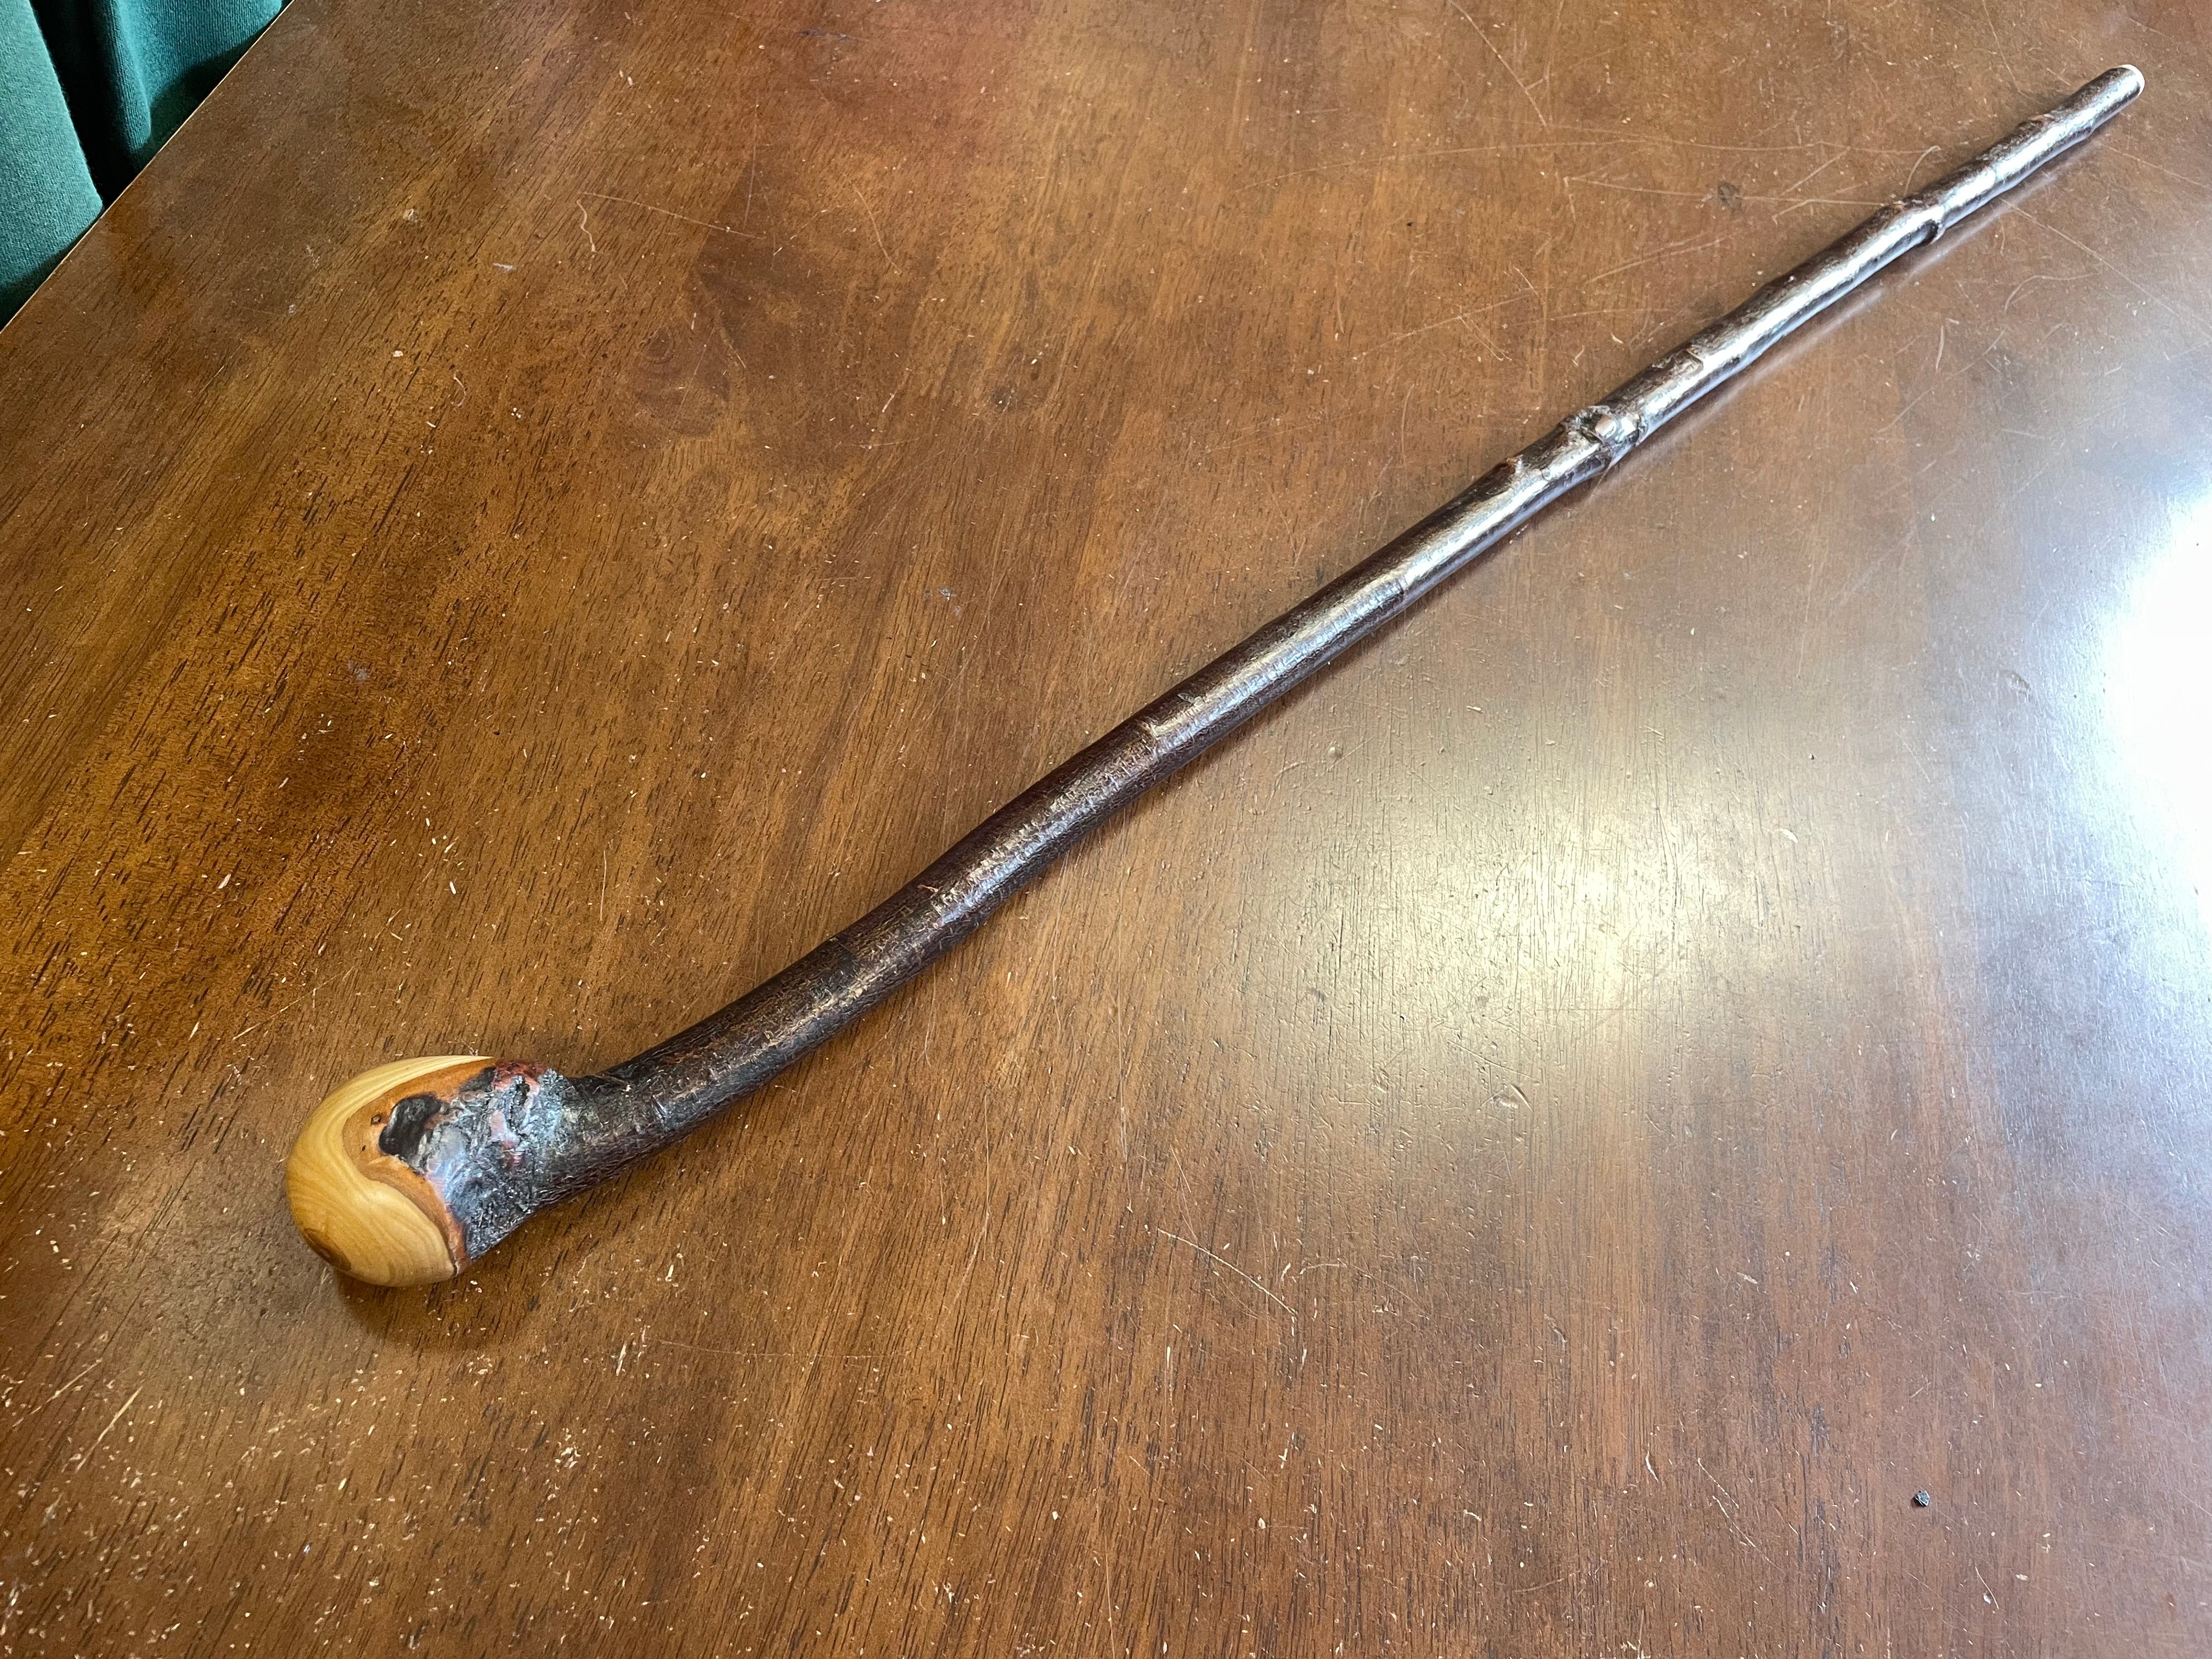 Blackthorn Walking Stick 37 3/4 inch - Handmade in Ireland